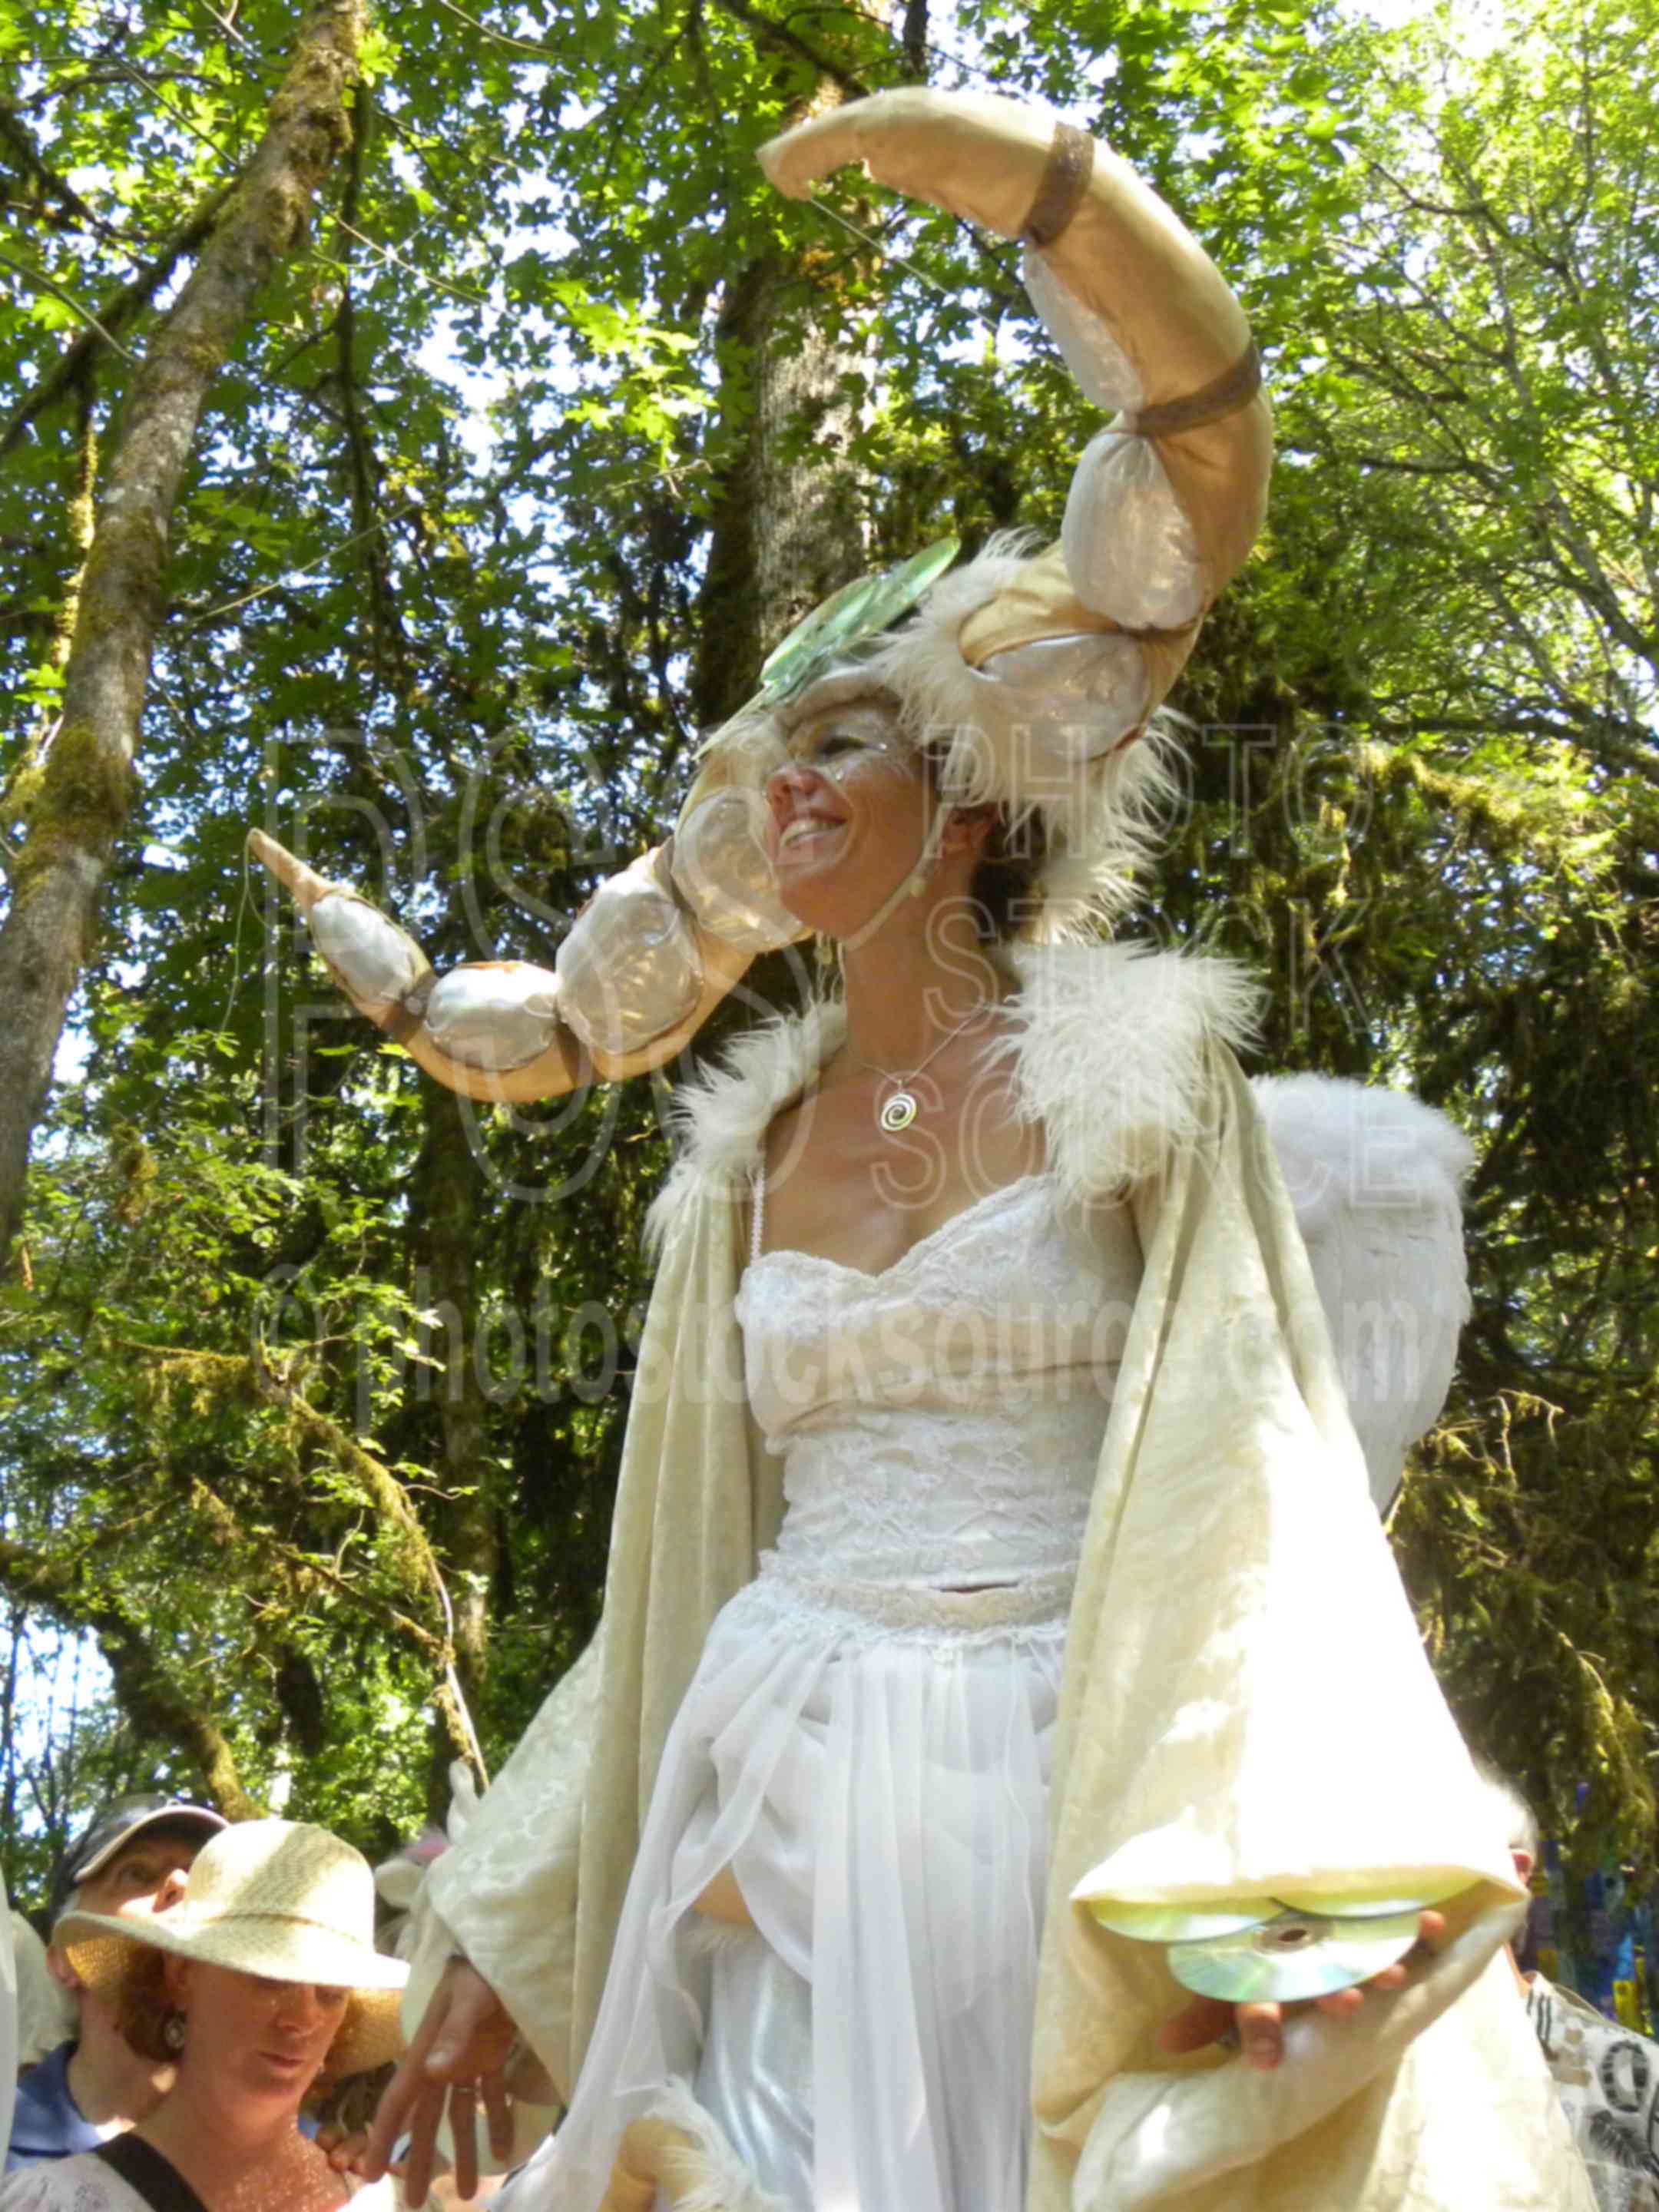 Woman in Costume,color,fair,faire,festival,gathering,hippy,hippies,celebration,costume